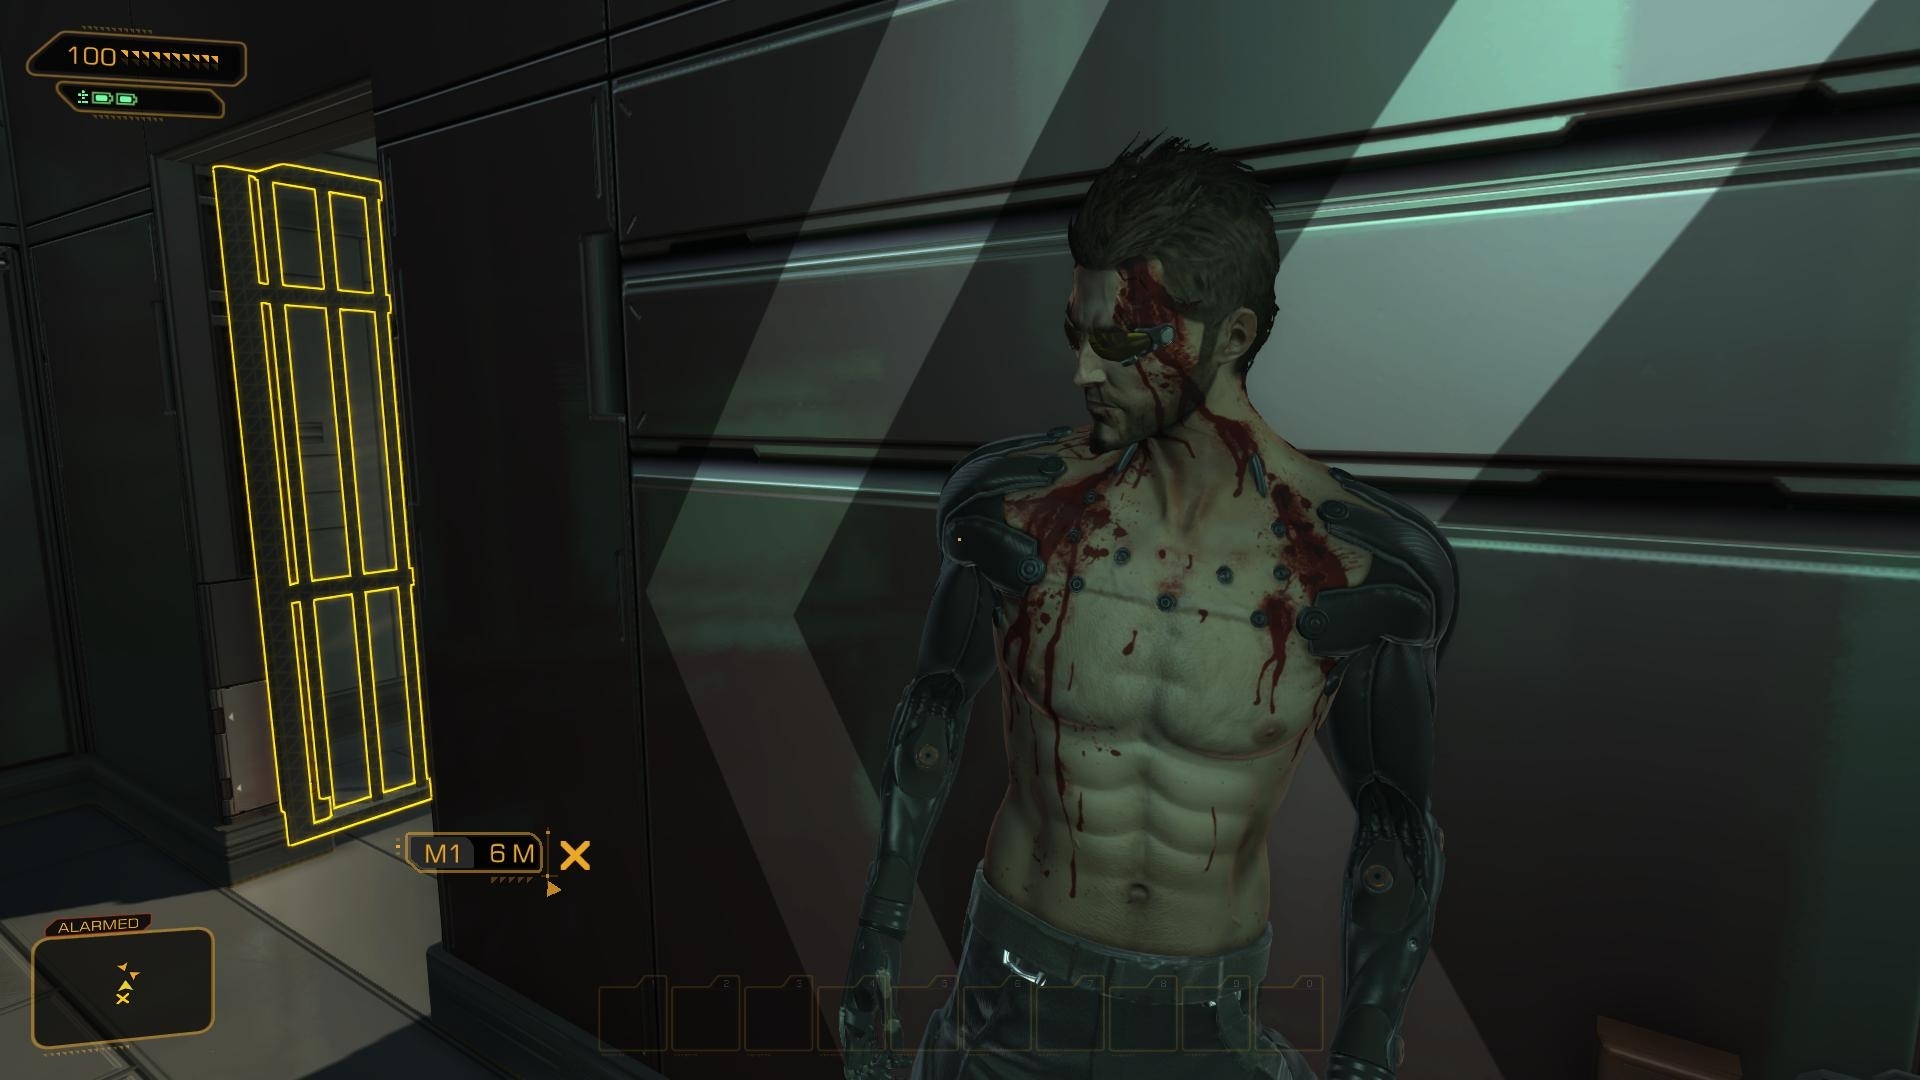 Deus Ex Image Dehr The Missing Link01 HD Wallpaper And